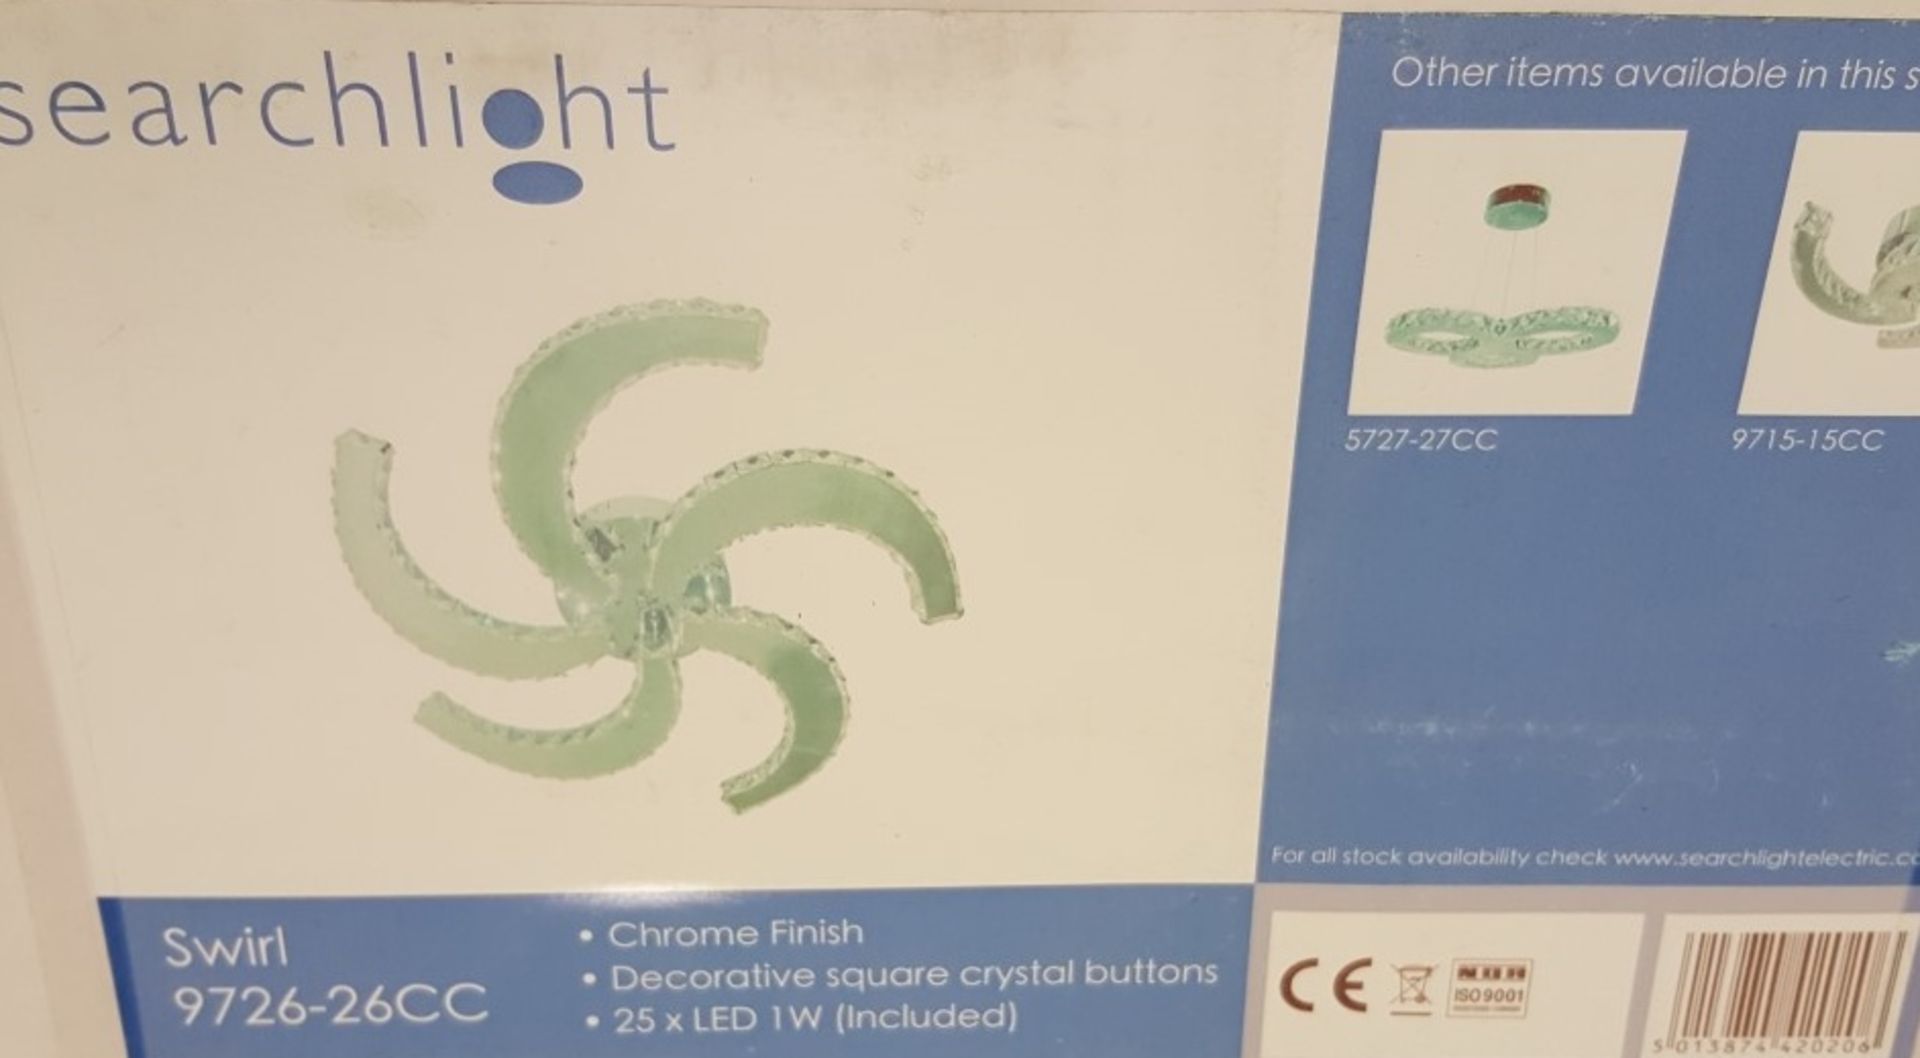 1 x Searchlight 9726-26CC Clover 26 Light Flush Crystal Ceiling Light Polished Chrome - New Boxed